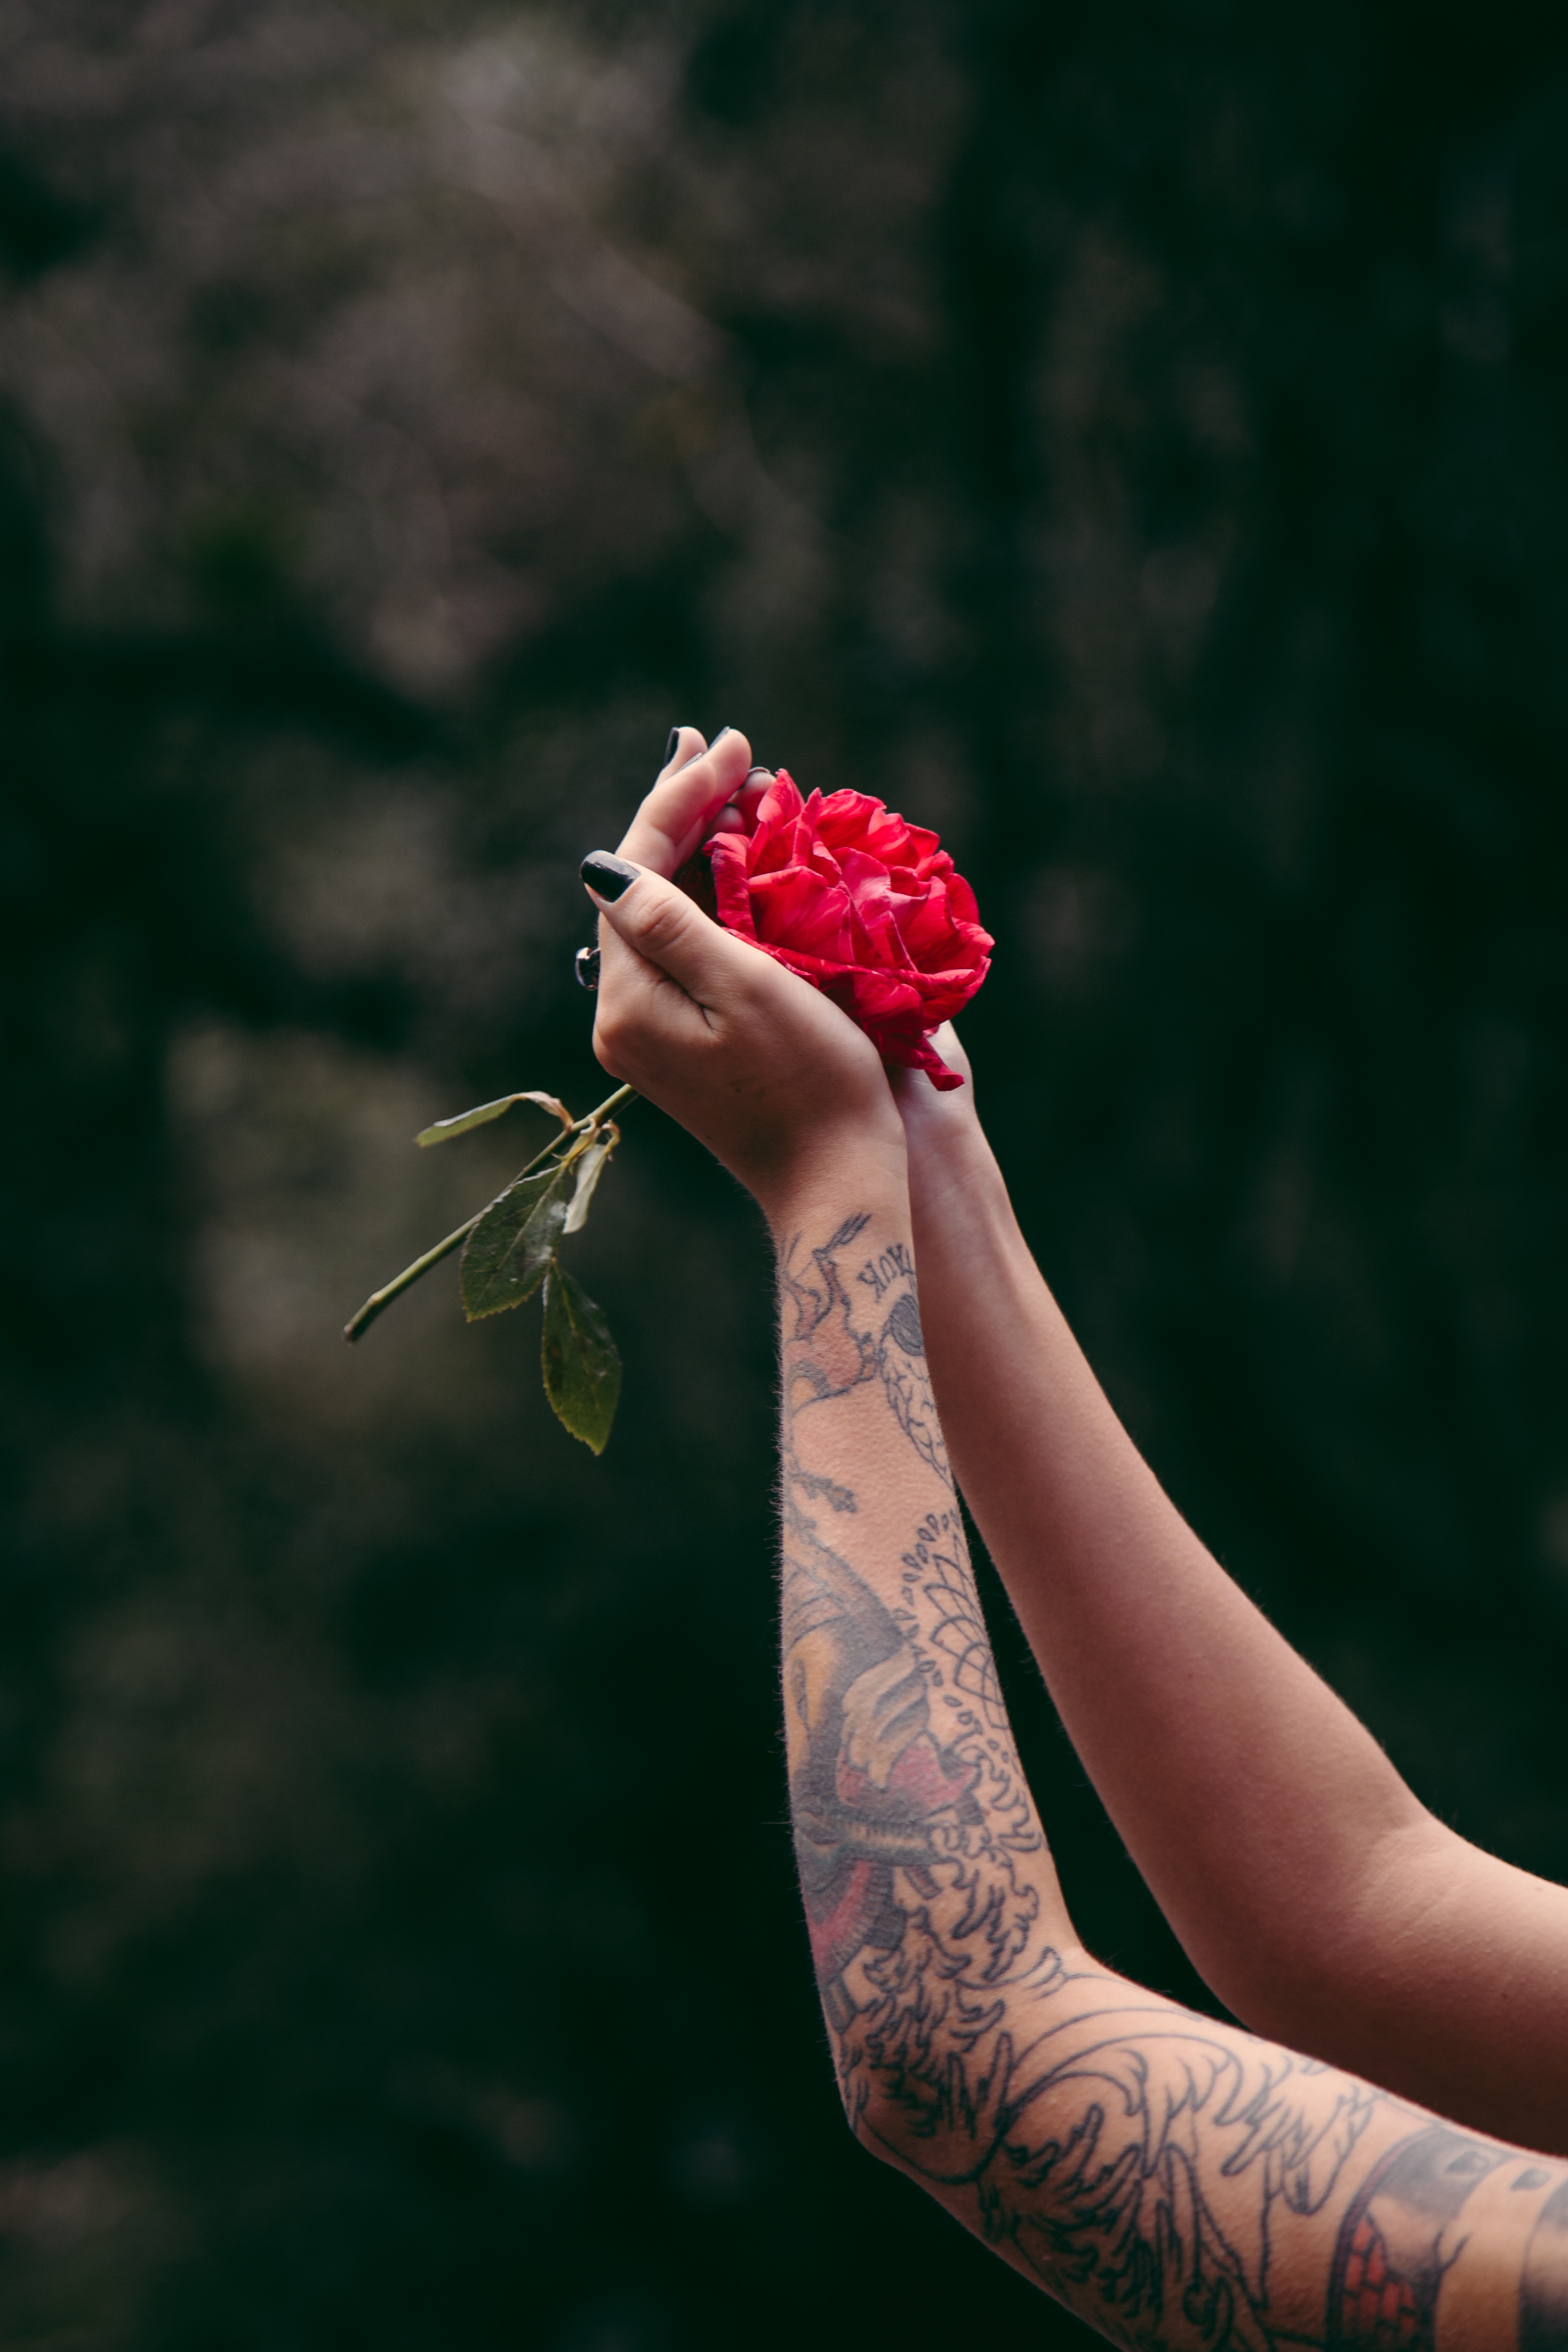 94975 descargar imagen flores, rosa, flor rosa, manos, tatuaje, tatuajes: fondos de pantalla y protectores de pantalla gratis